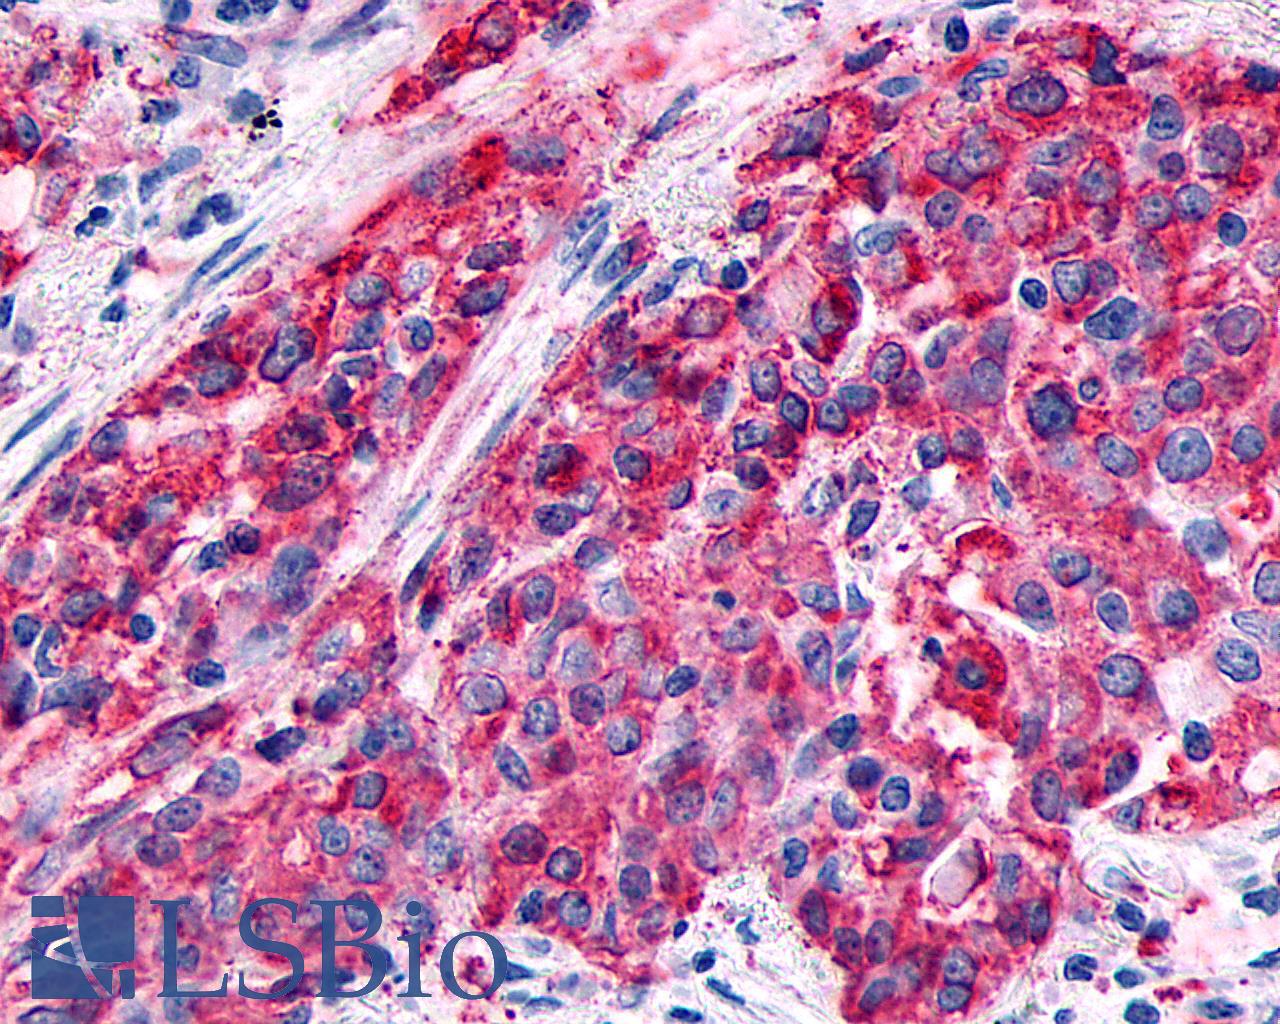 GPR89A Antibody - Lung, non small-cell carcinoma